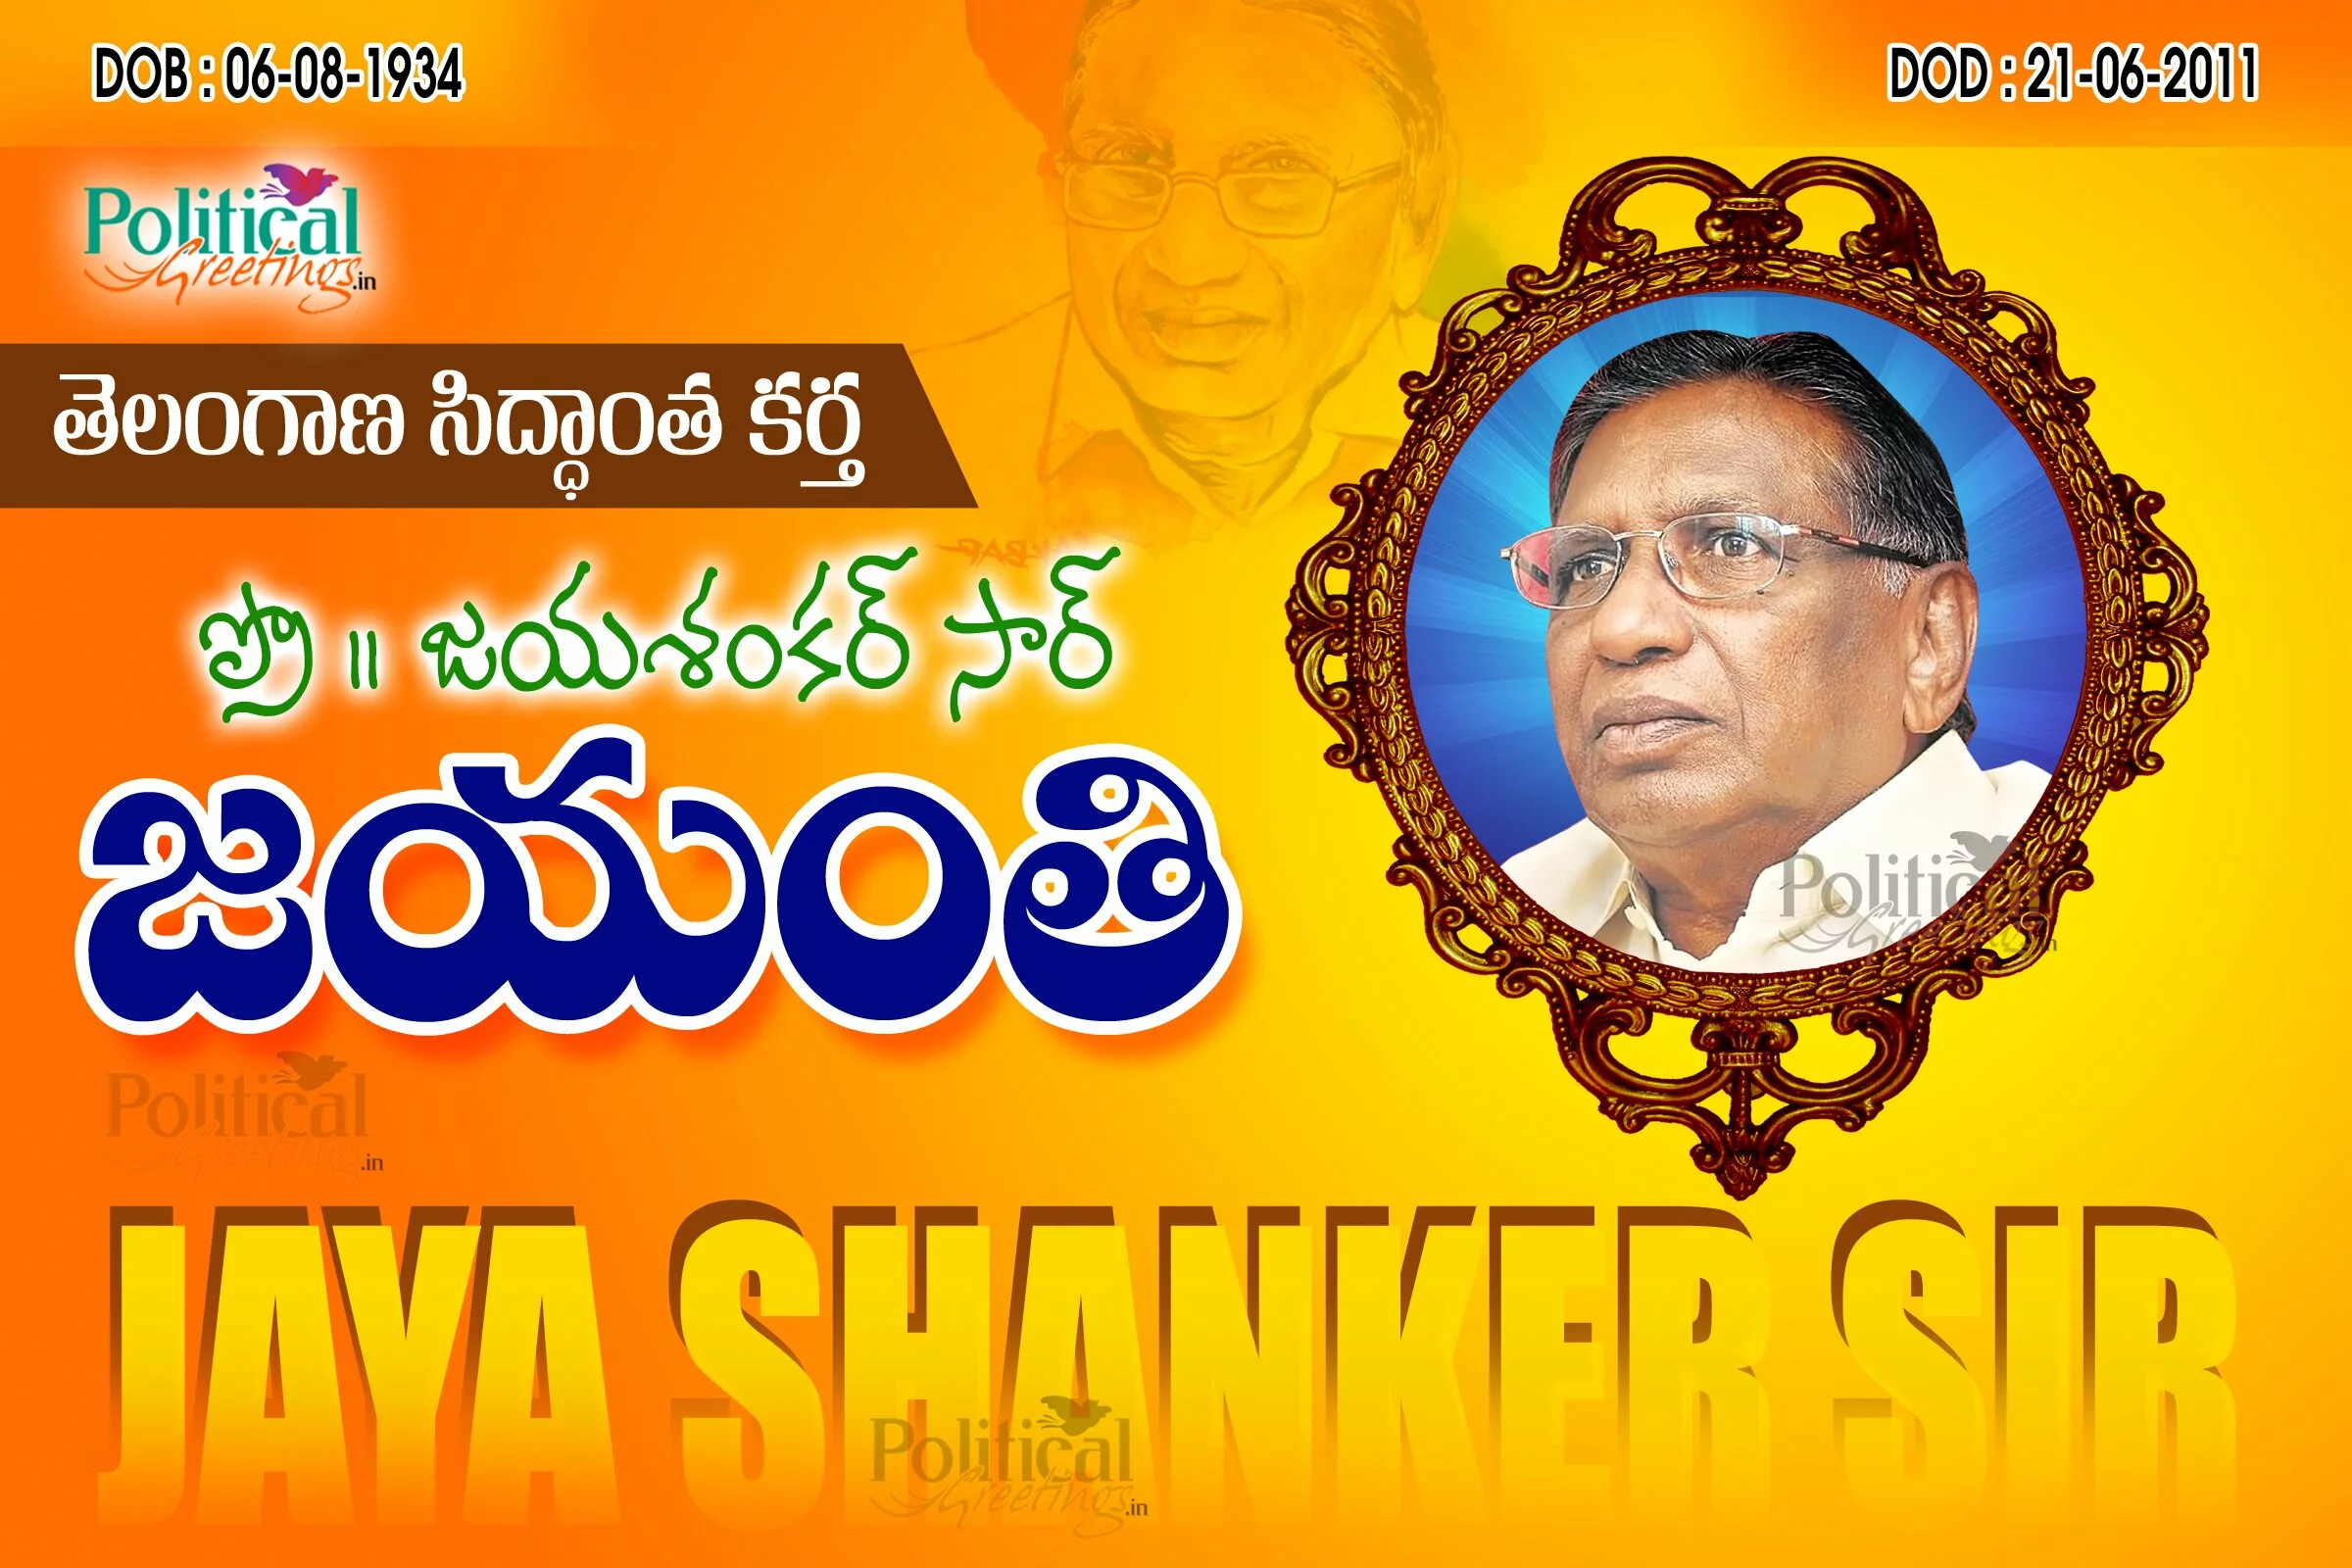 prof-jayashankar-sir-jayanthi-celebrations-wishes-greetings-hd-political-greetings